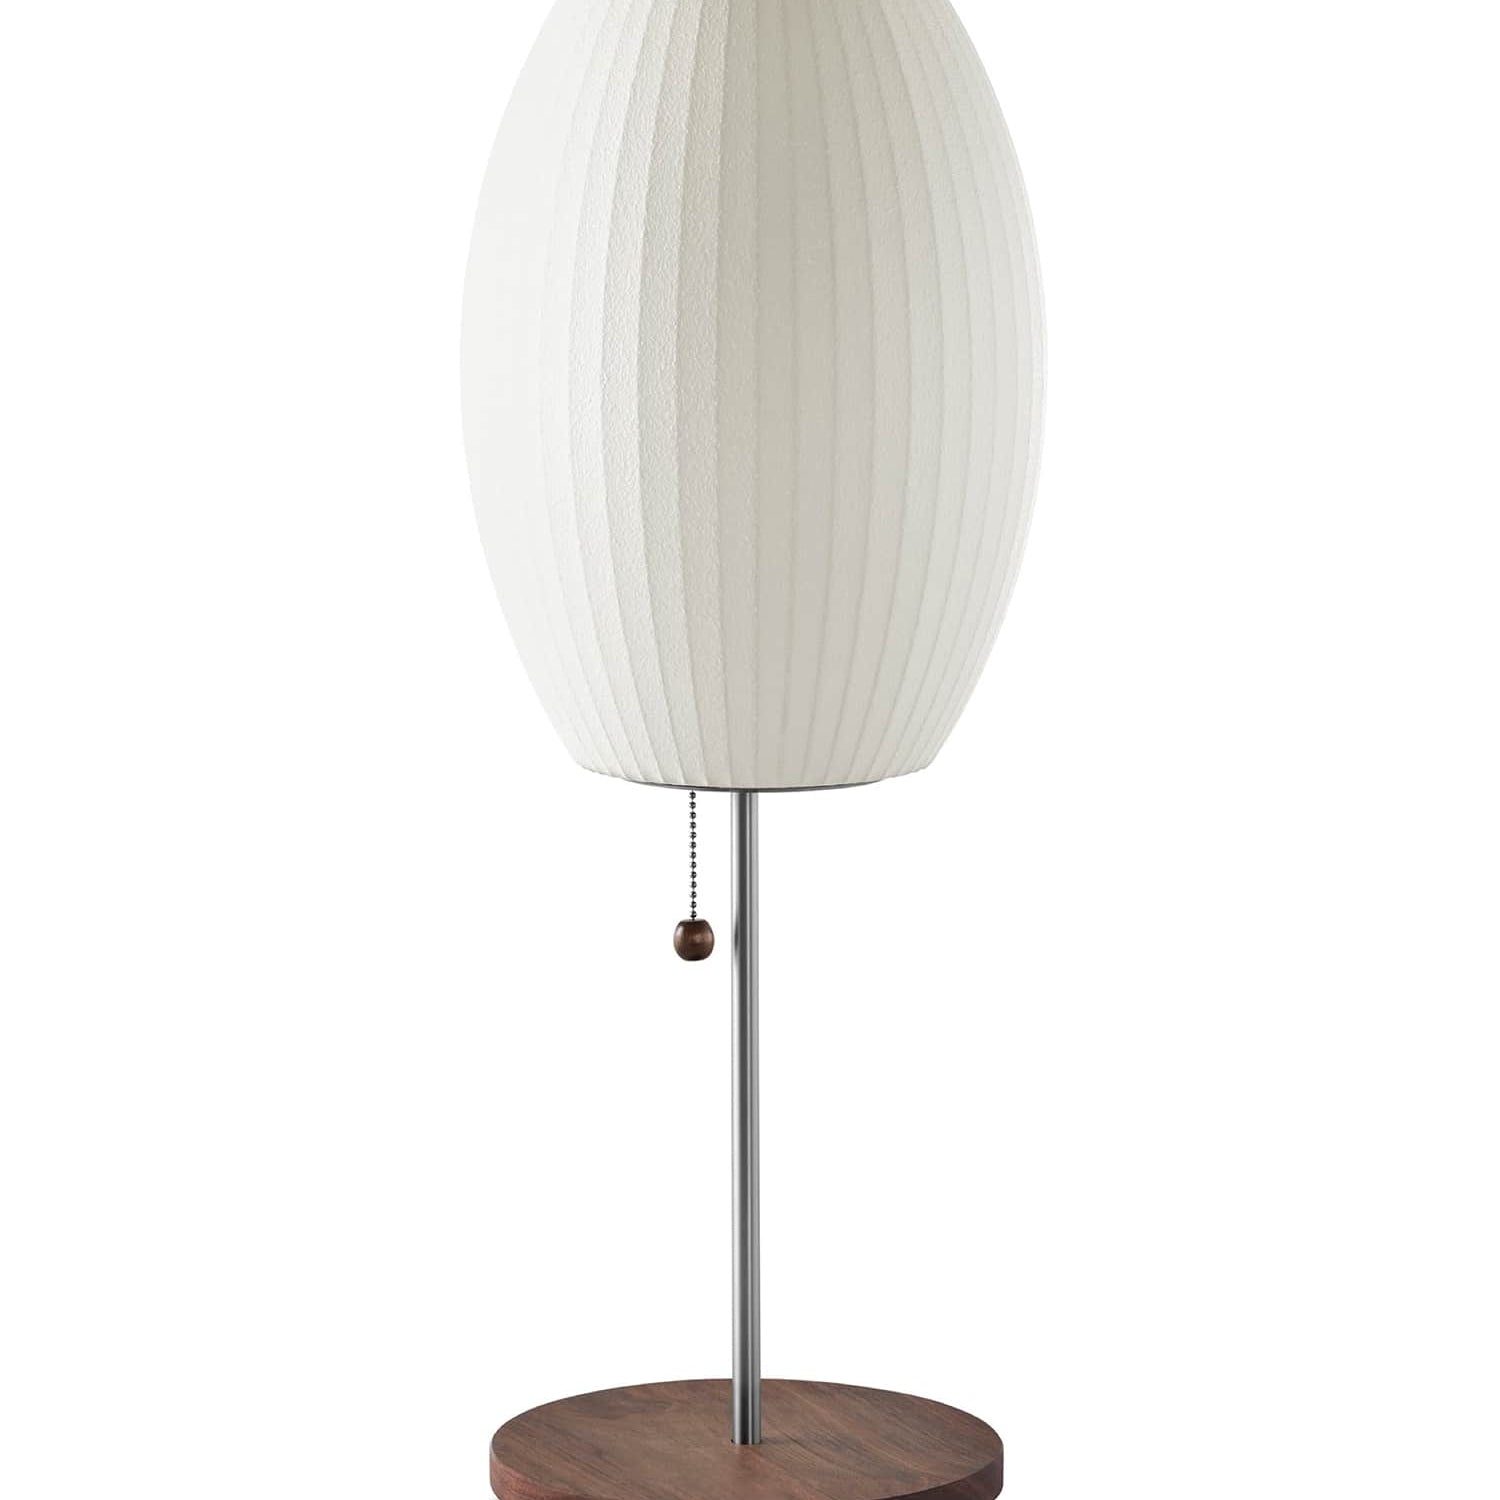 Nelson Cigar Lotus Table Lamp